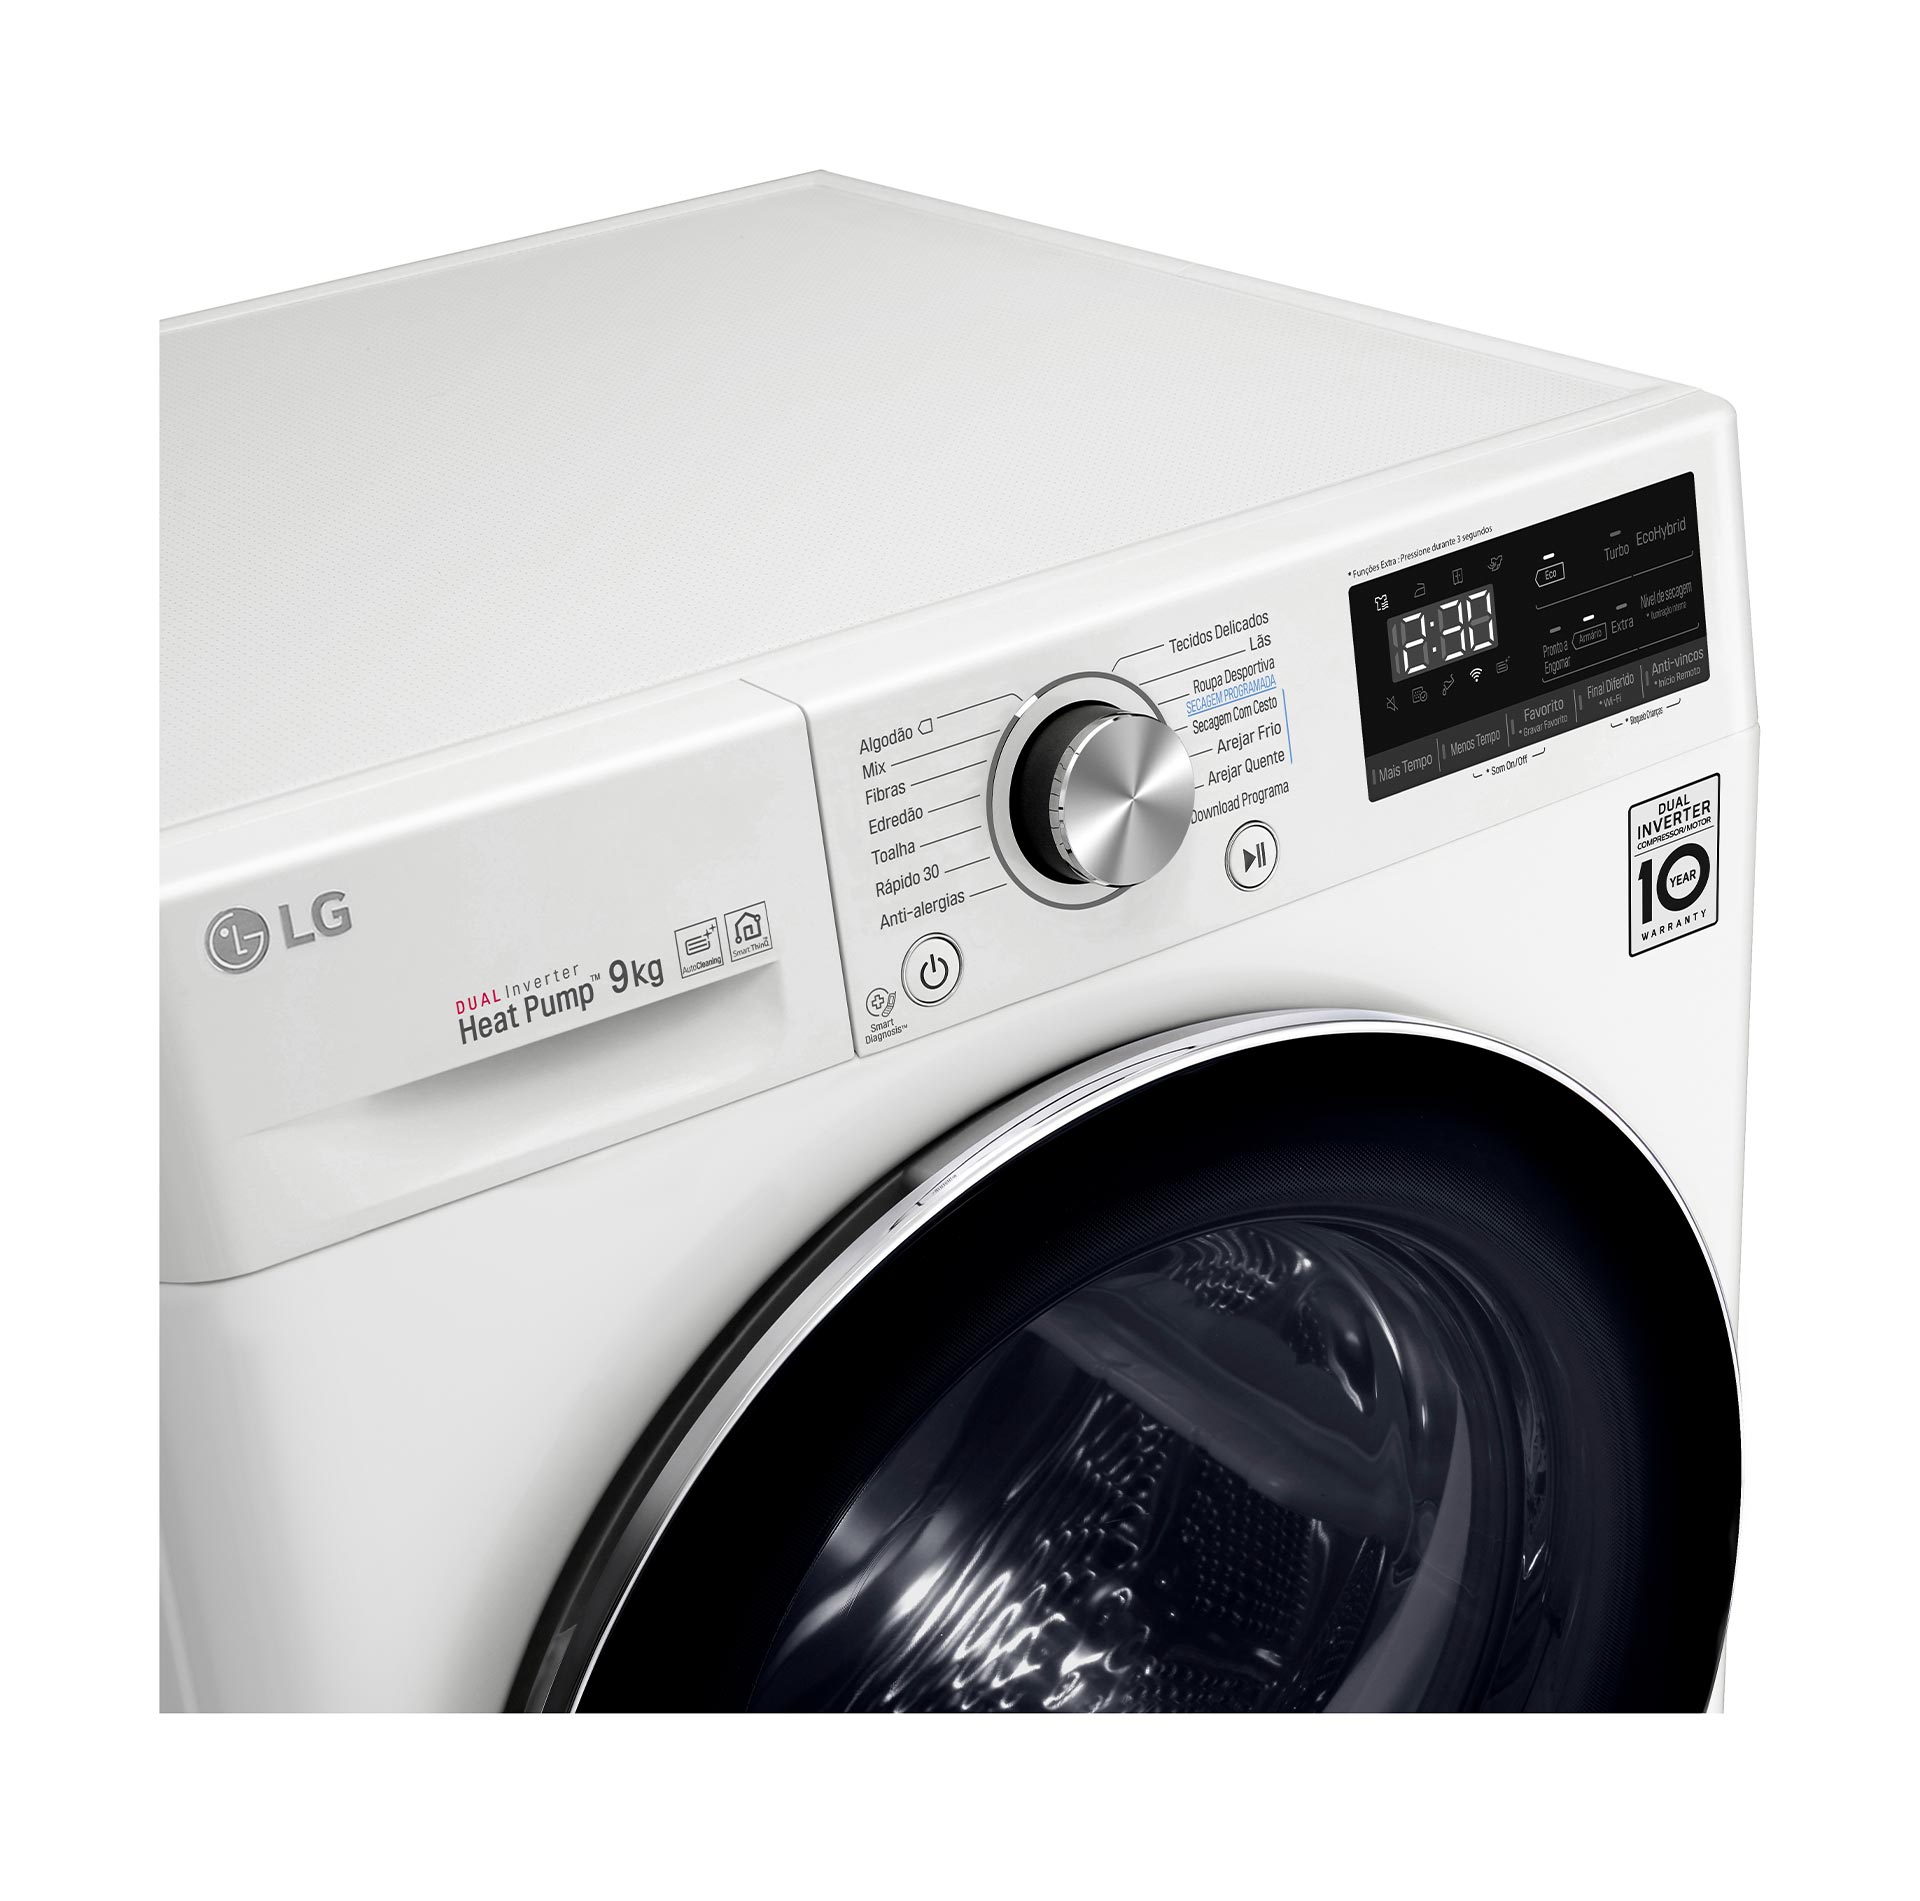 Loja EDP - Maquinas de secar roupa - Ref LG RC90V9AV2W